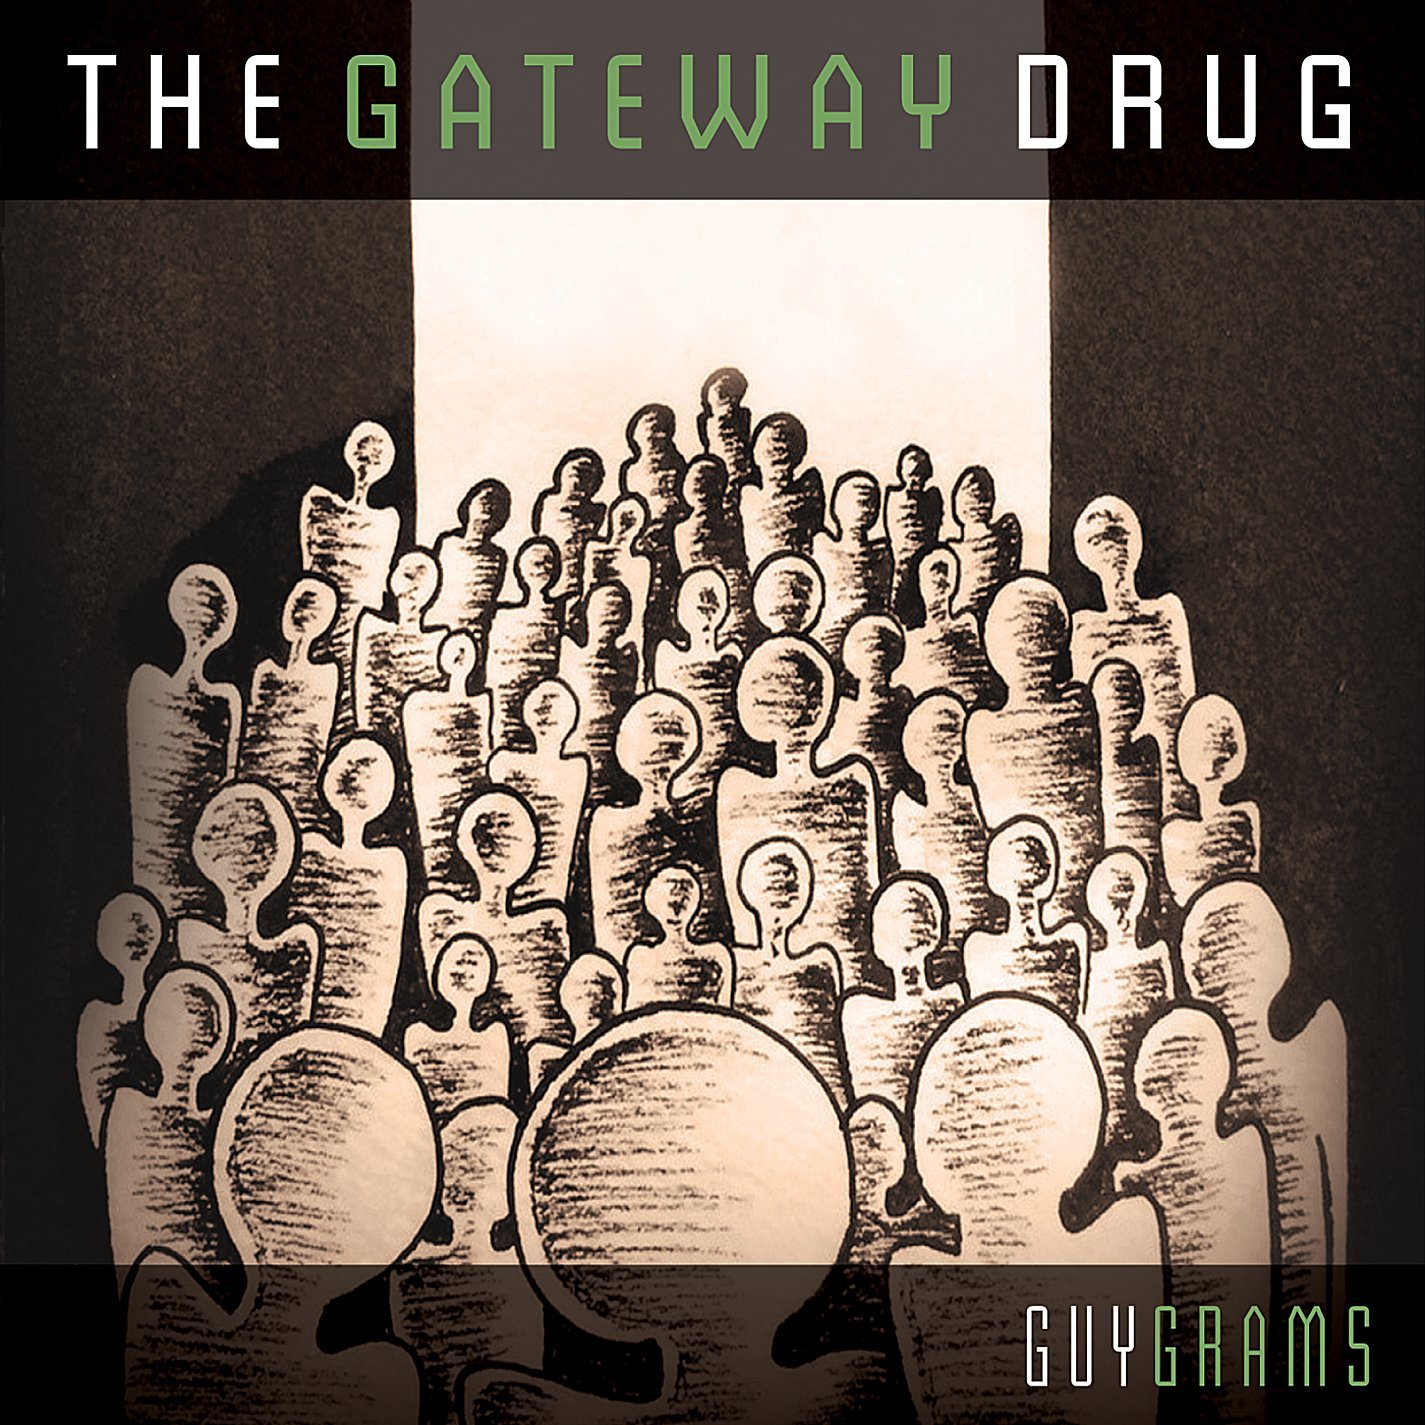 THE GATEWAY DRUG